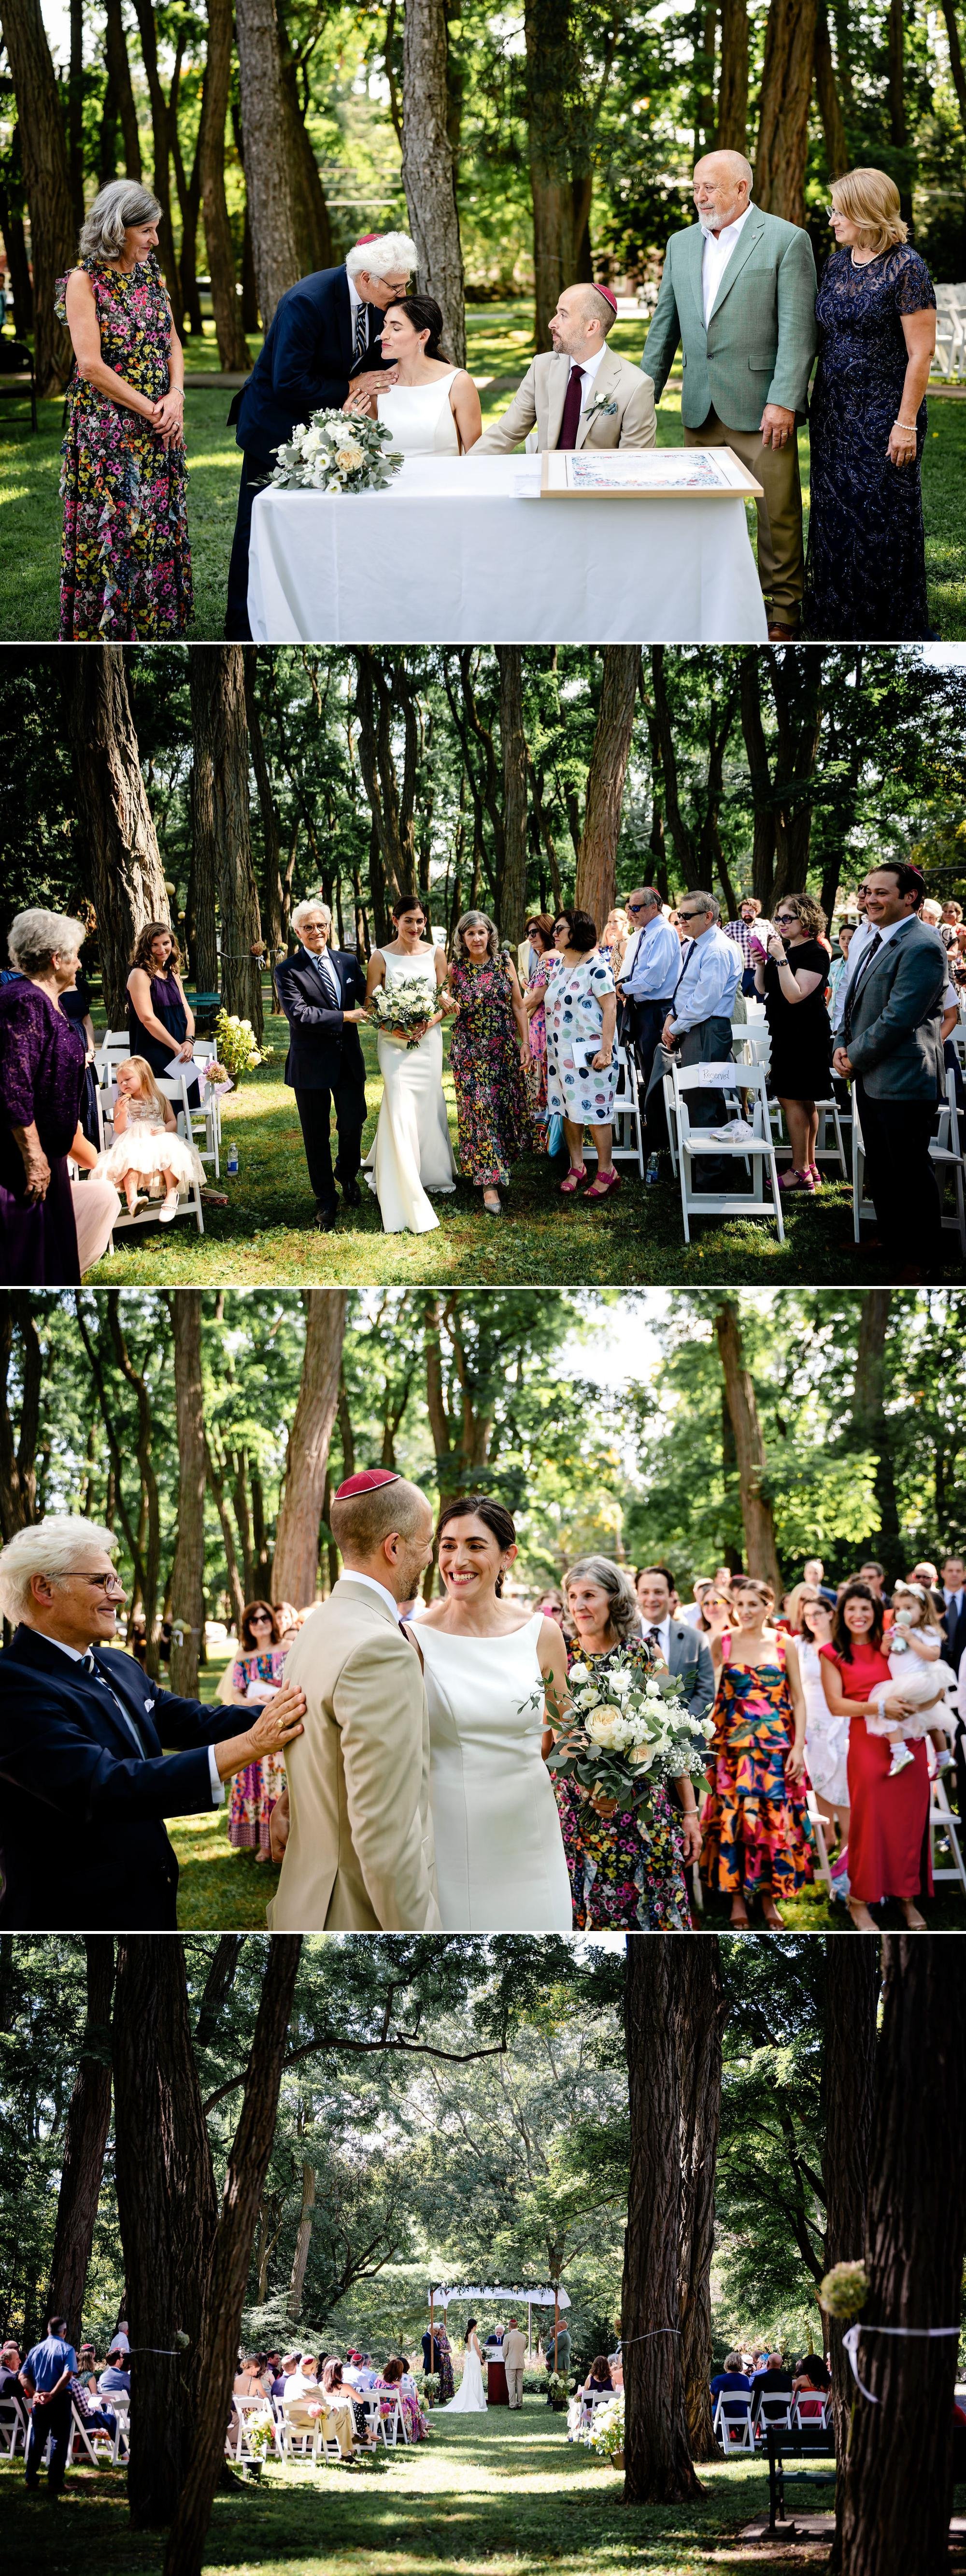 photos from a jewish wedding ceremony